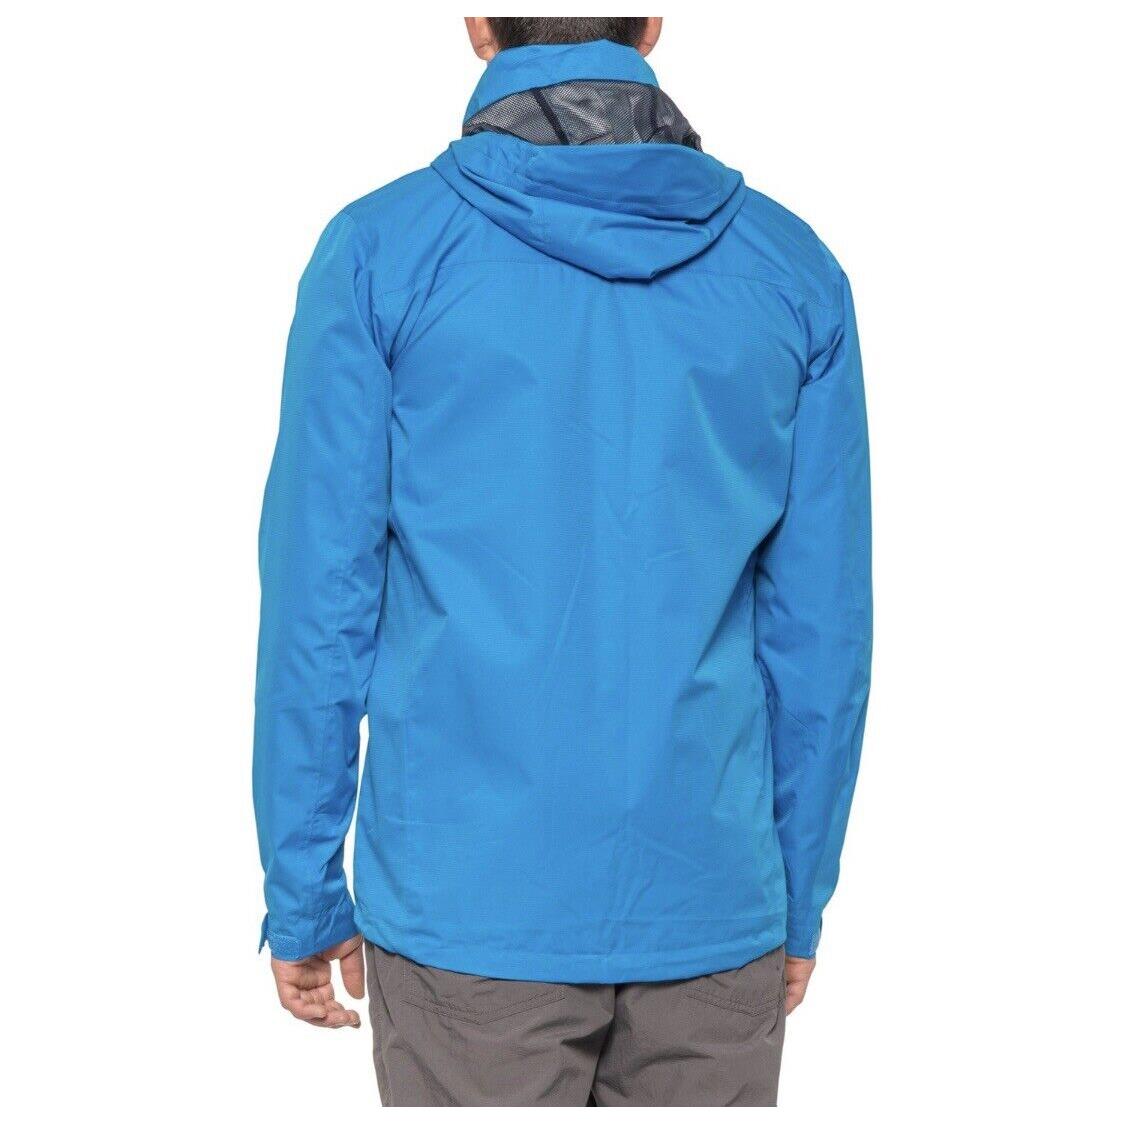 Adidas Outdoor Wandertag Shield Waterproof Jacket Shock Blue Men s Size Medium